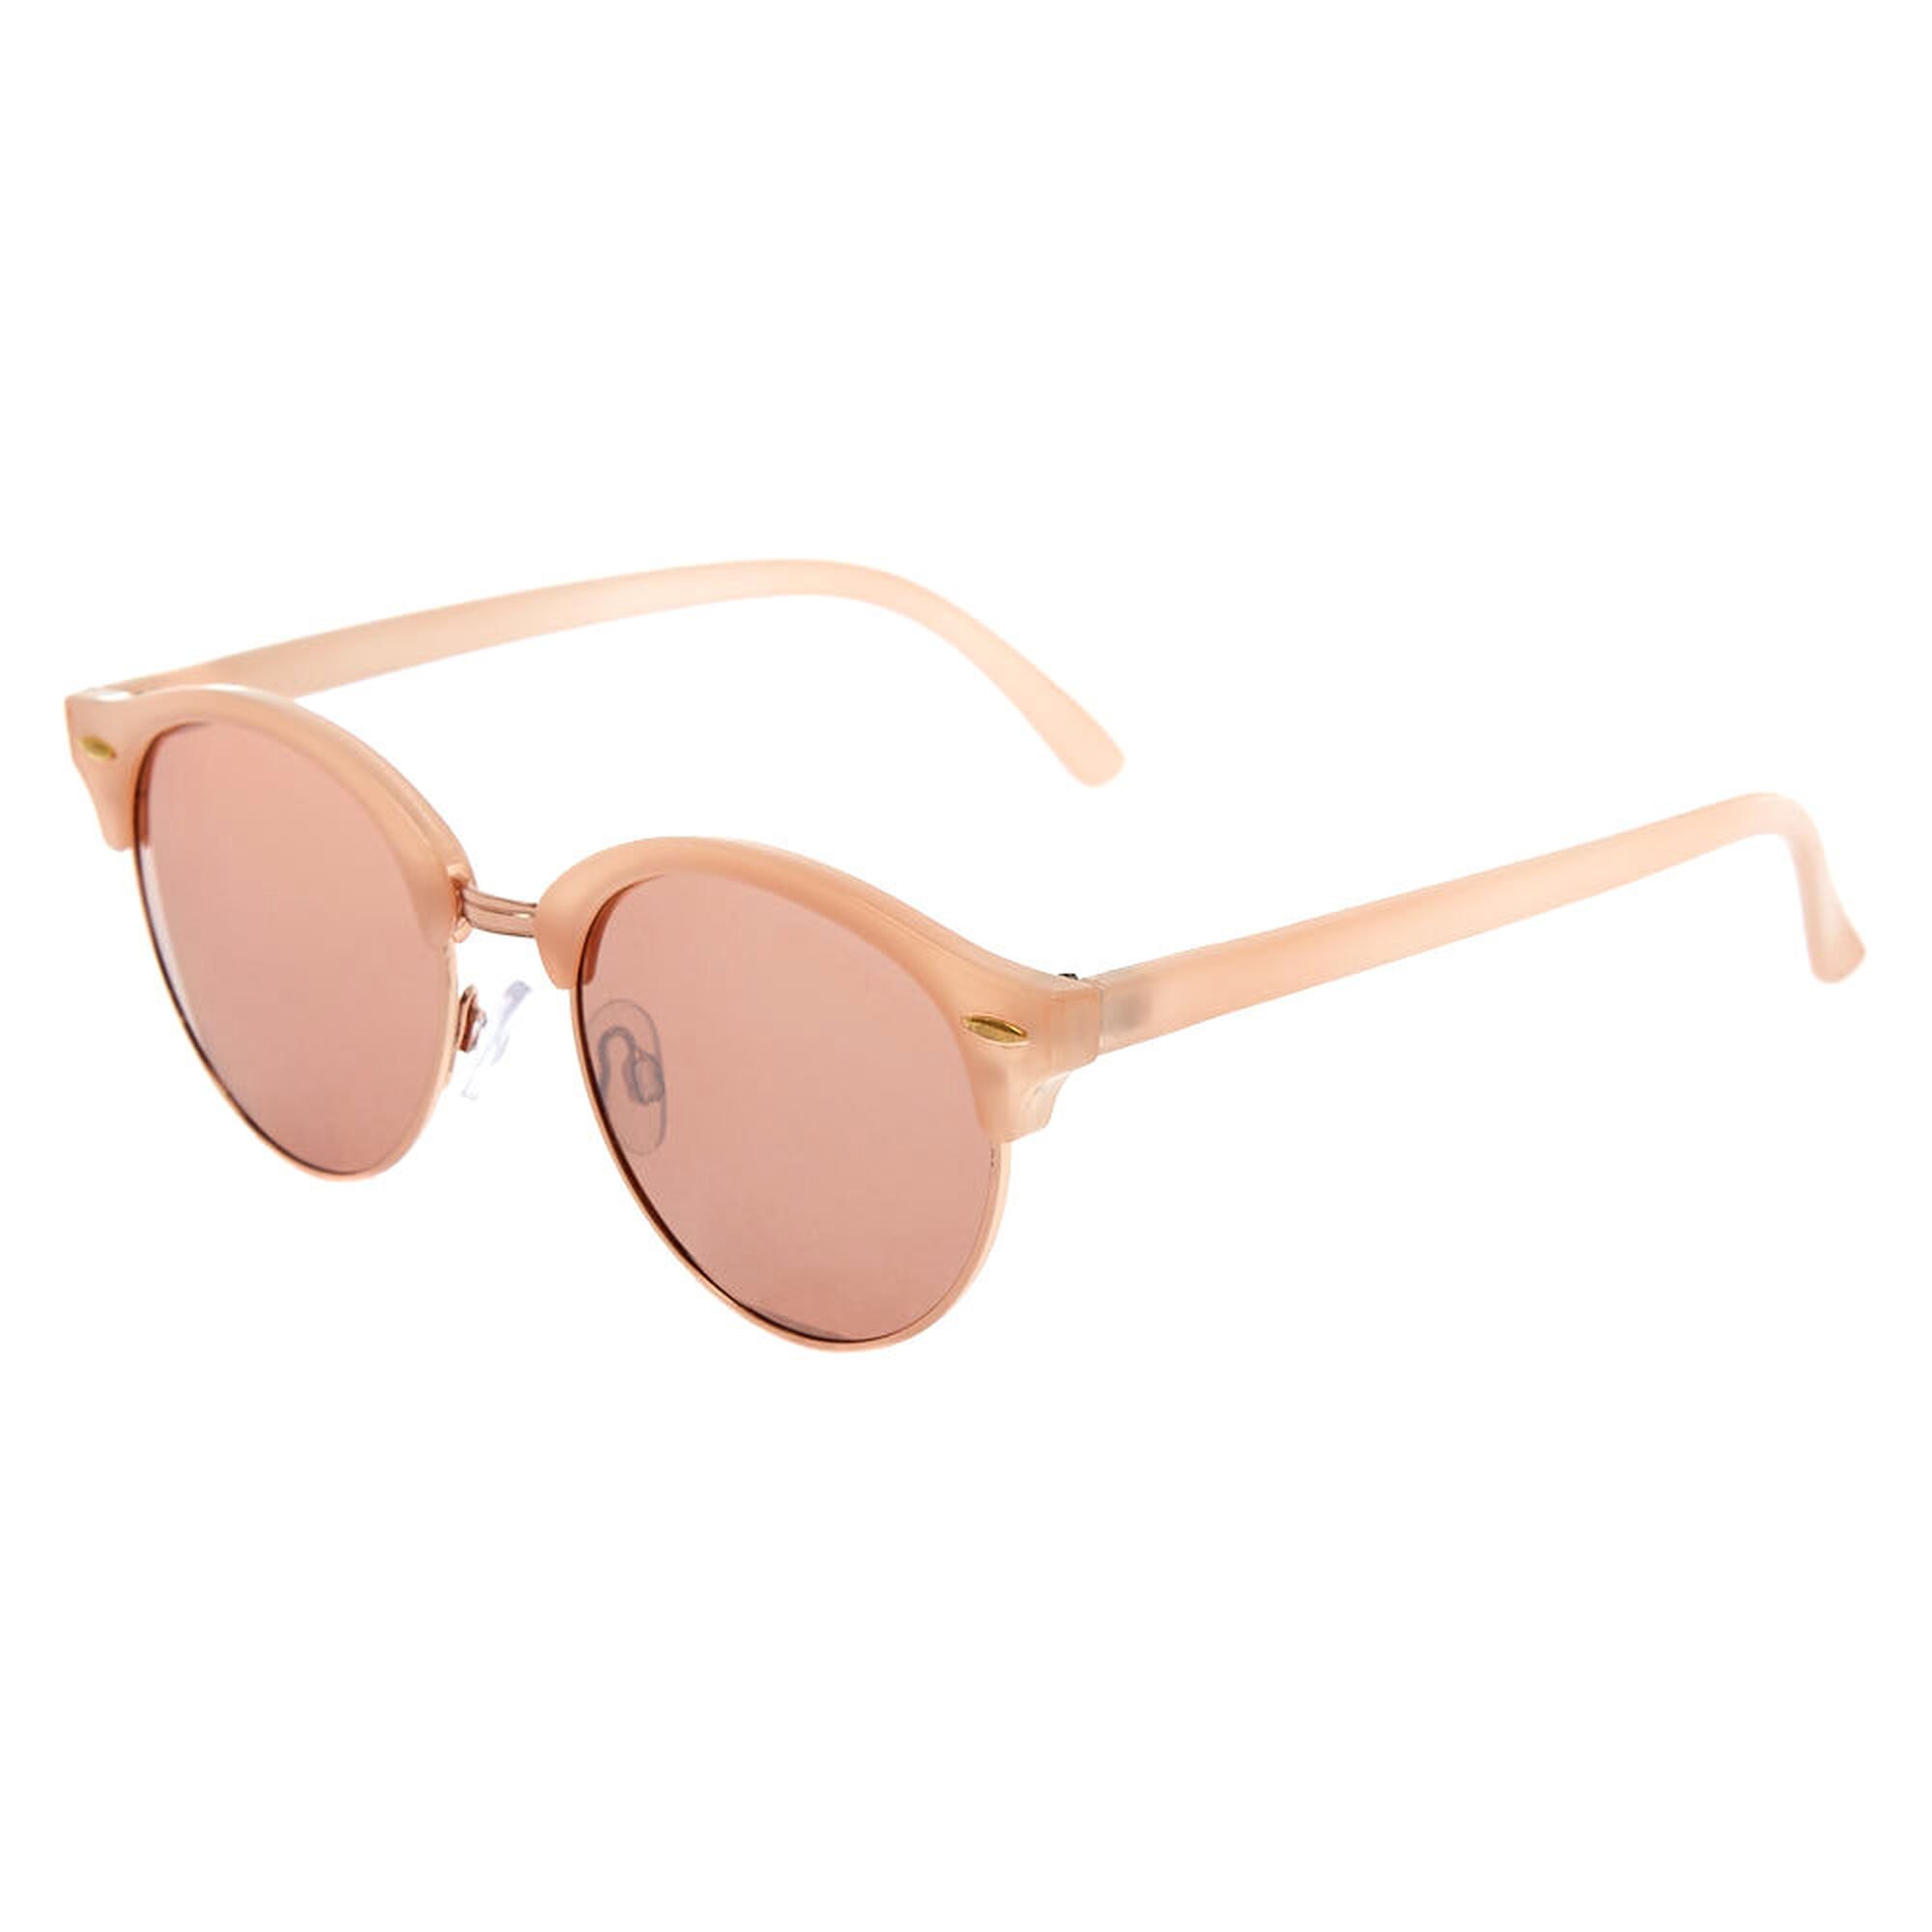 Rose Gold Tinted Mod Sunglasses - Blush